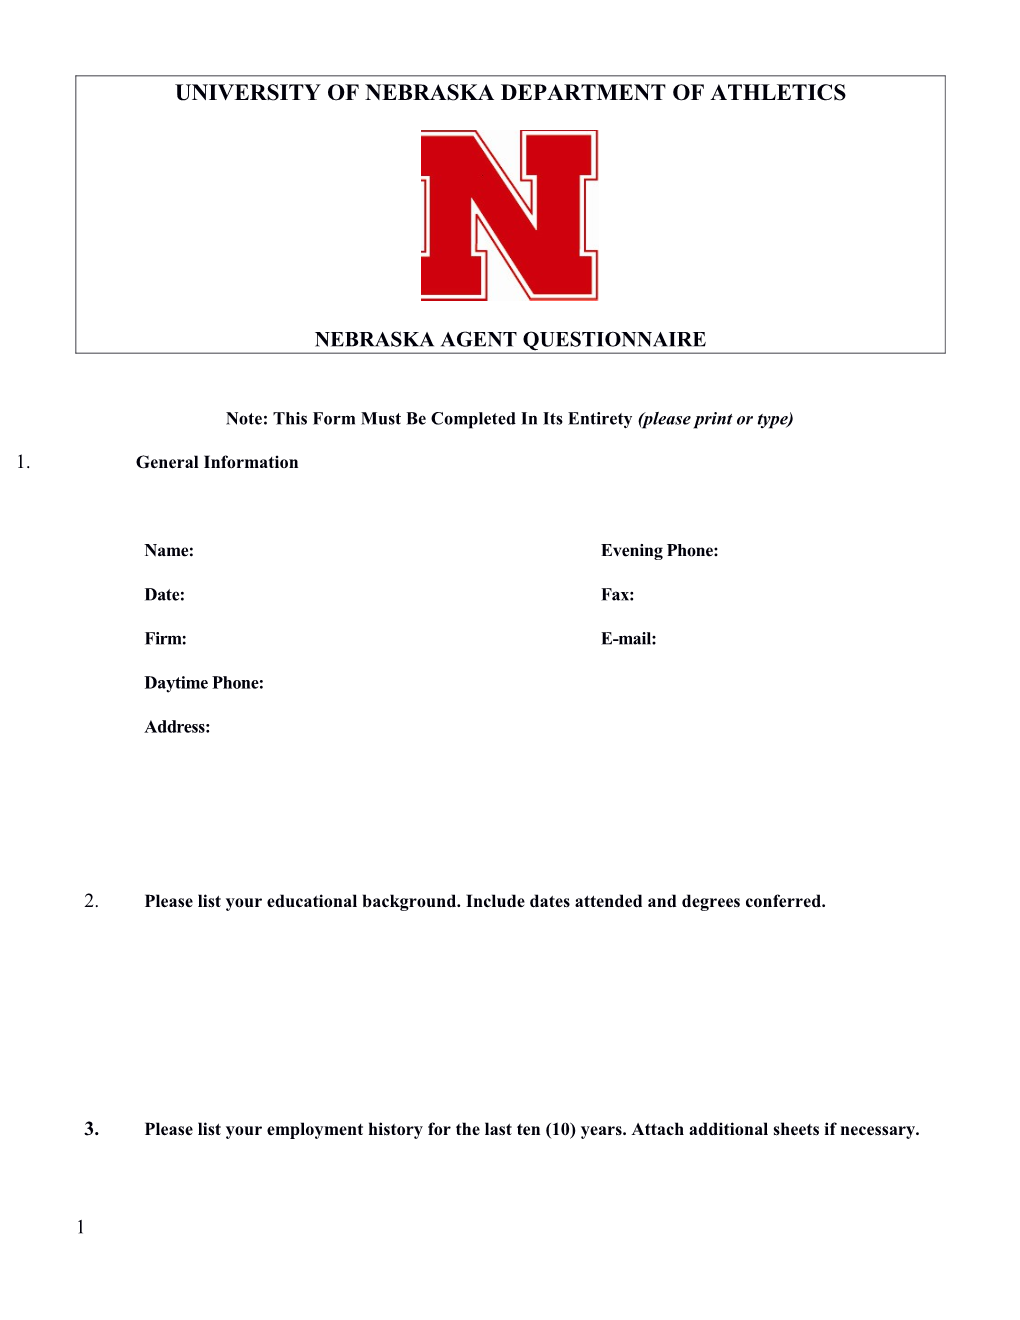 University of Nebraska Department of Athletics